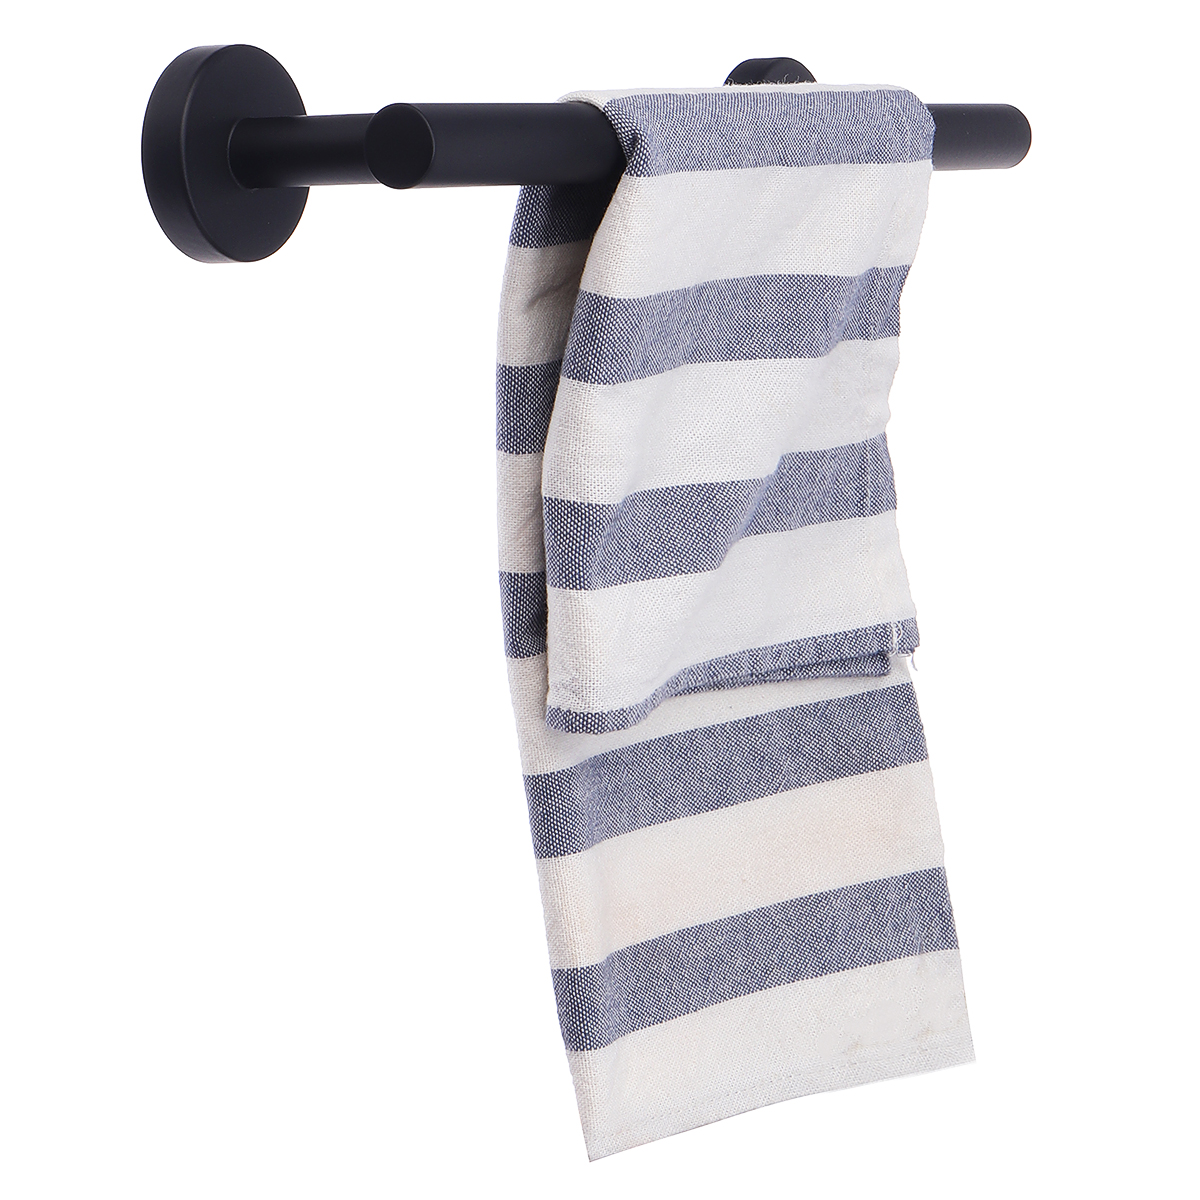 Towel Rack 304 Stainless Steel Toilet Paper Roll Holder Shelf Bathroom Washroom 6